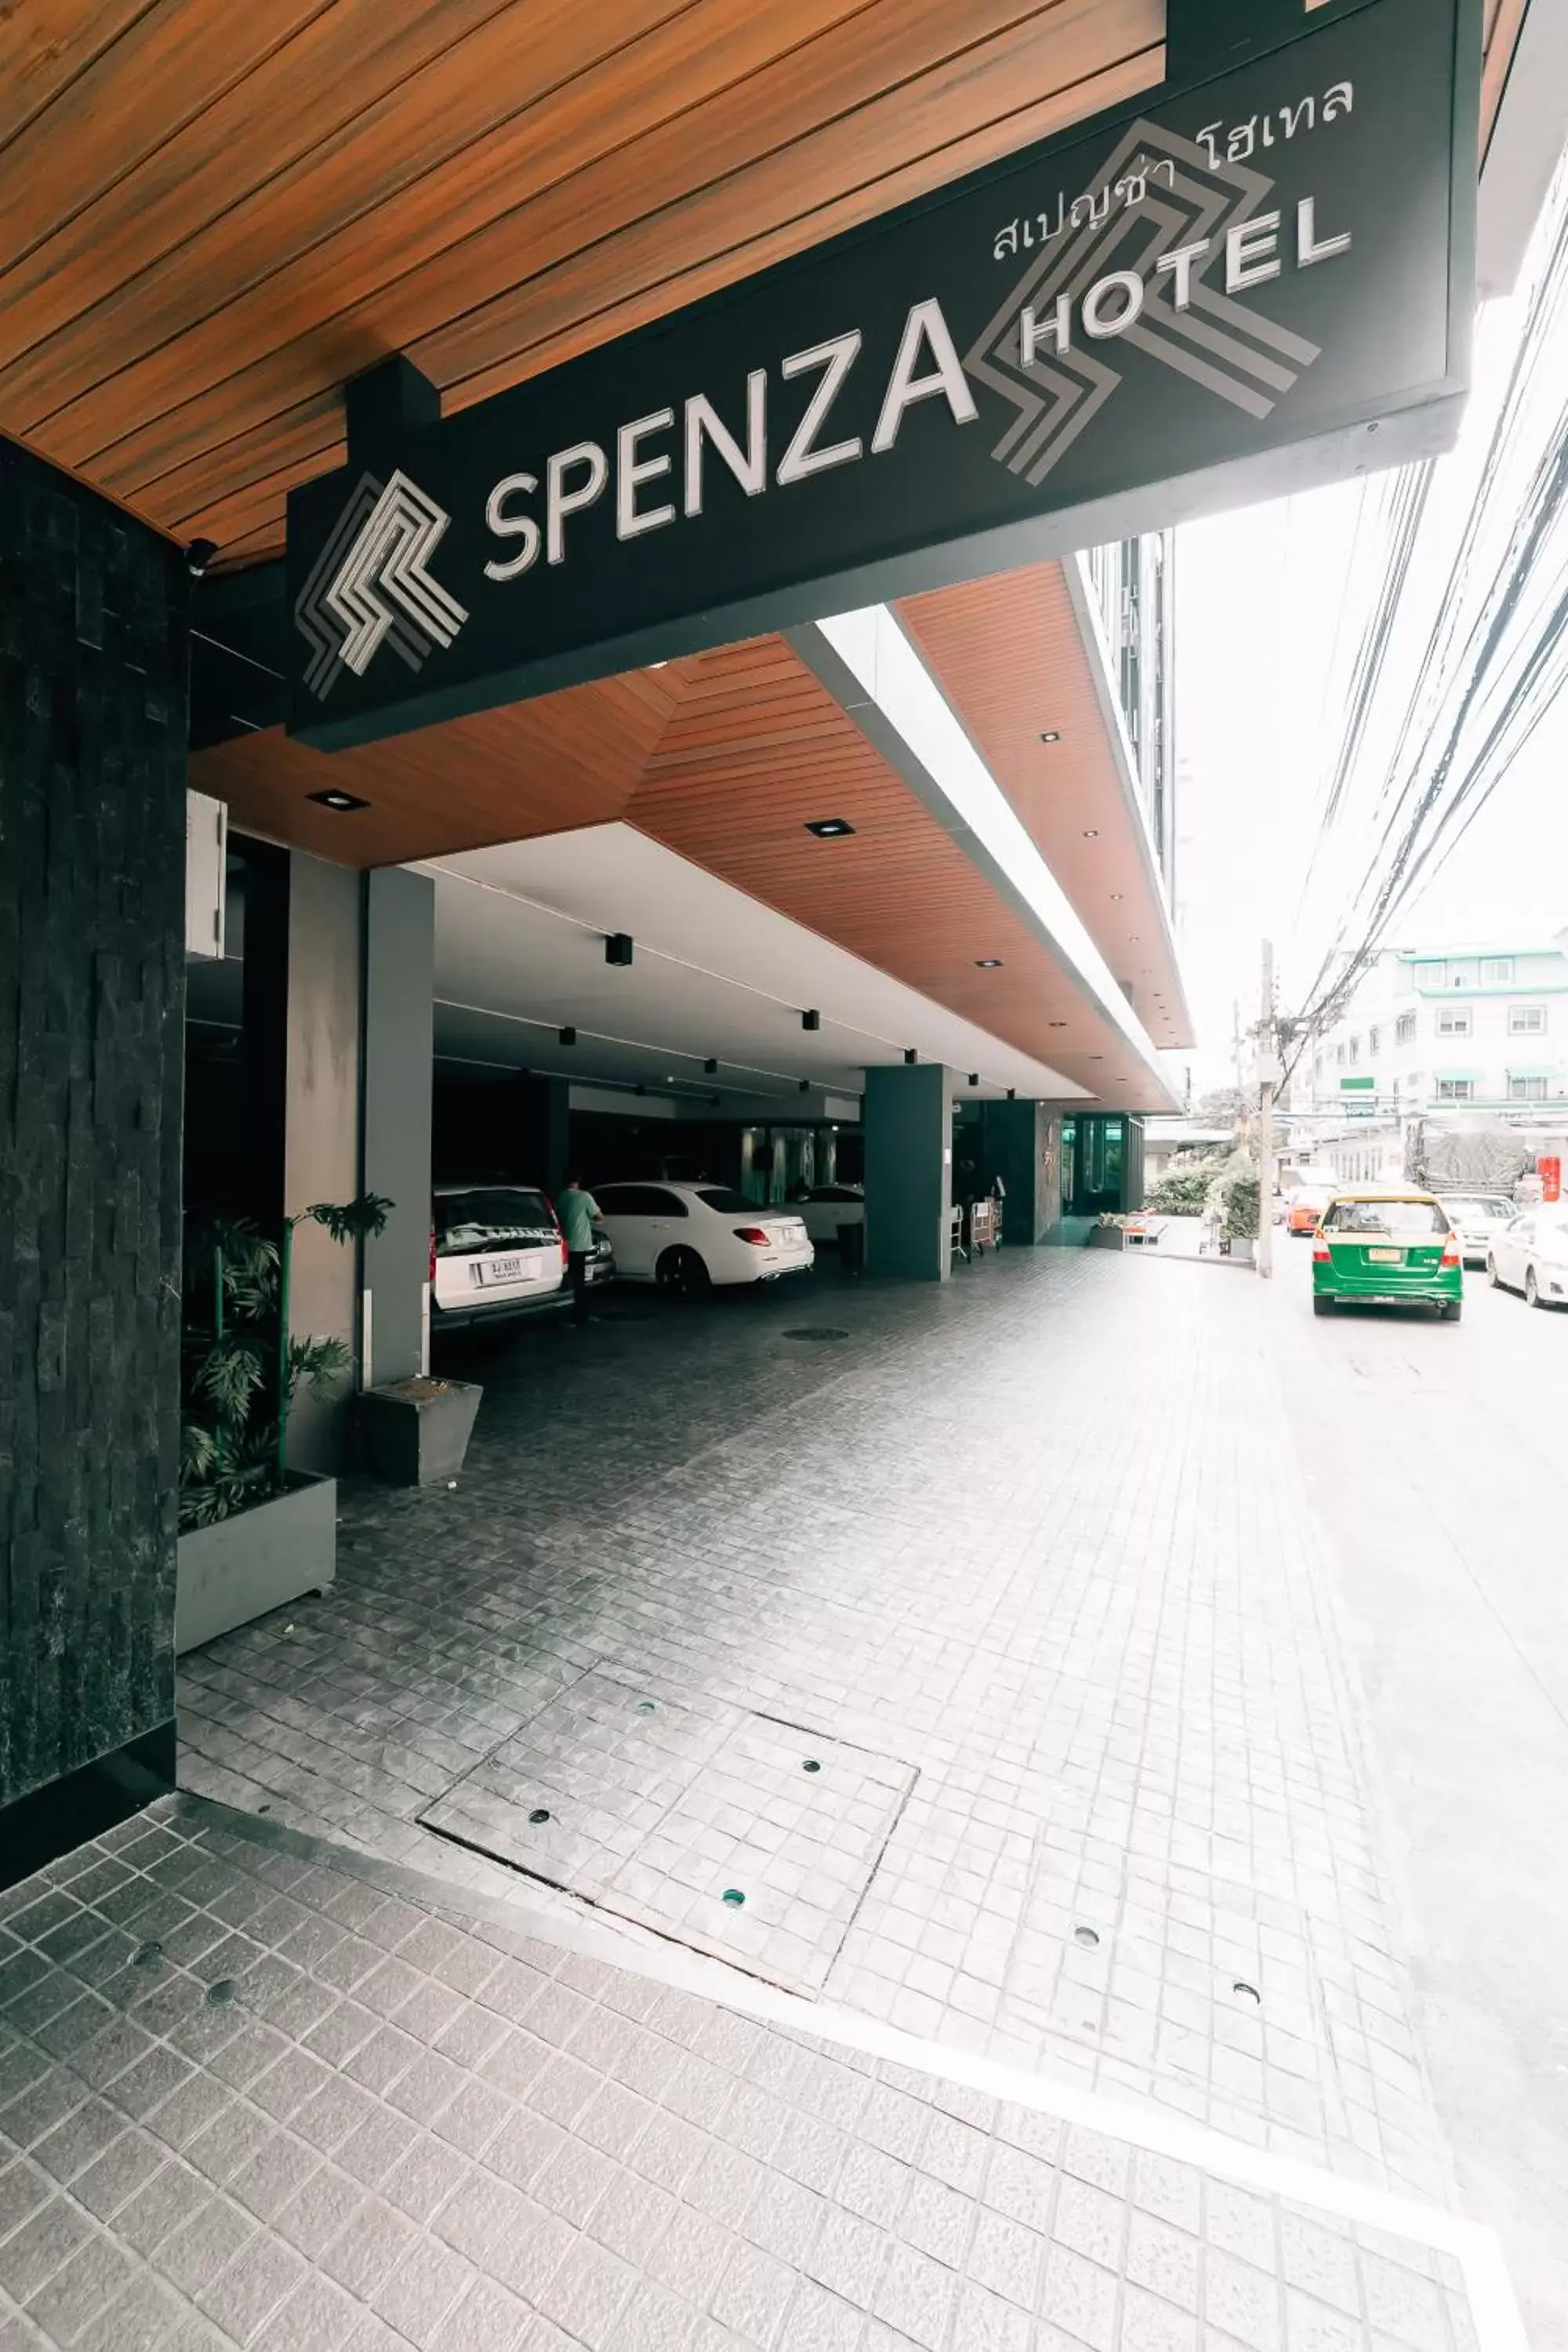 Parking in Spenza Hotel